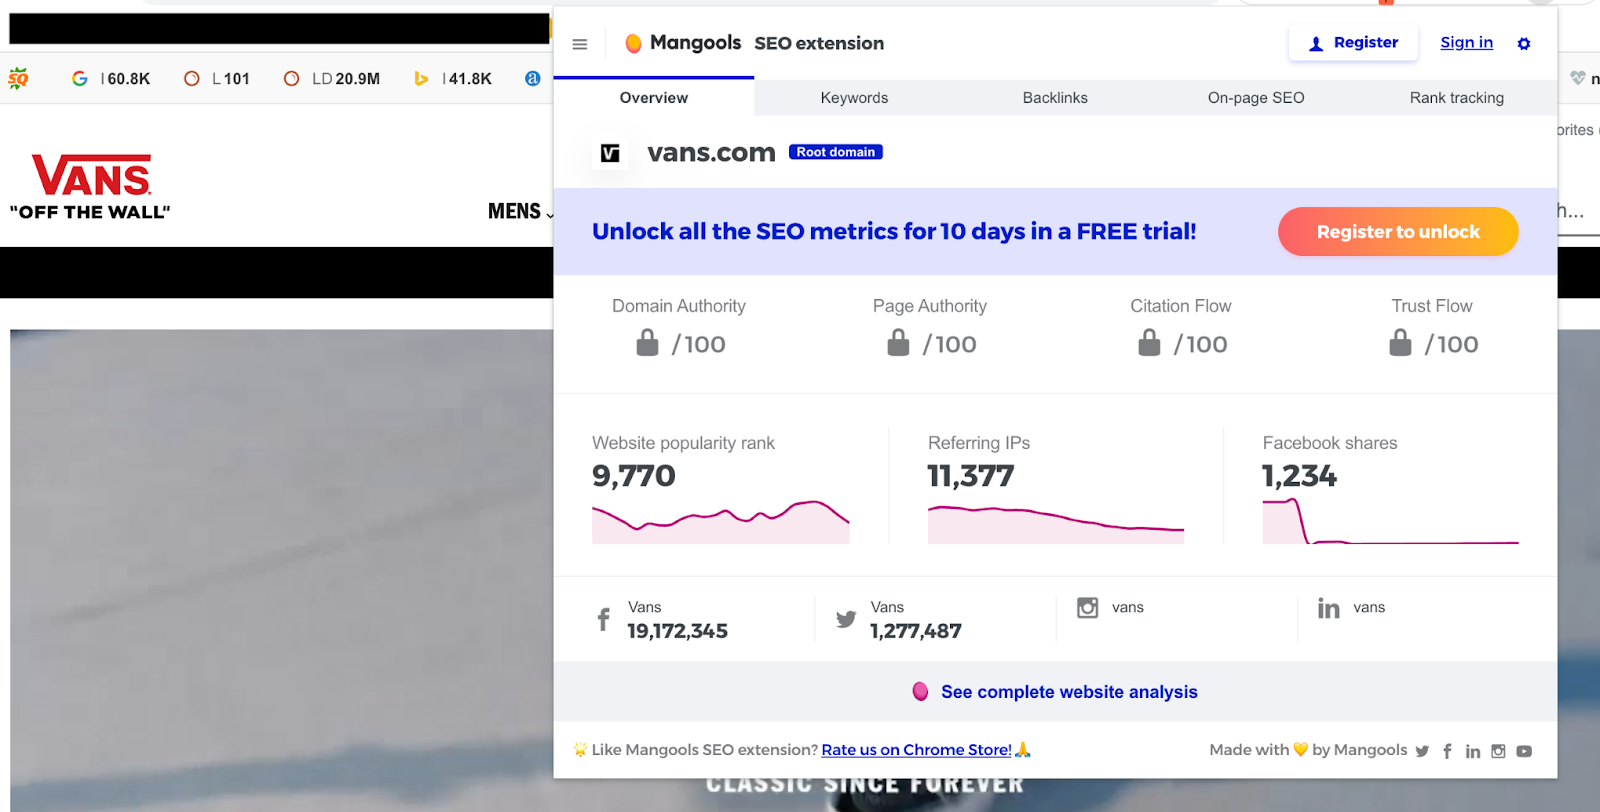 Mangools Chrome extension data on the Vans site